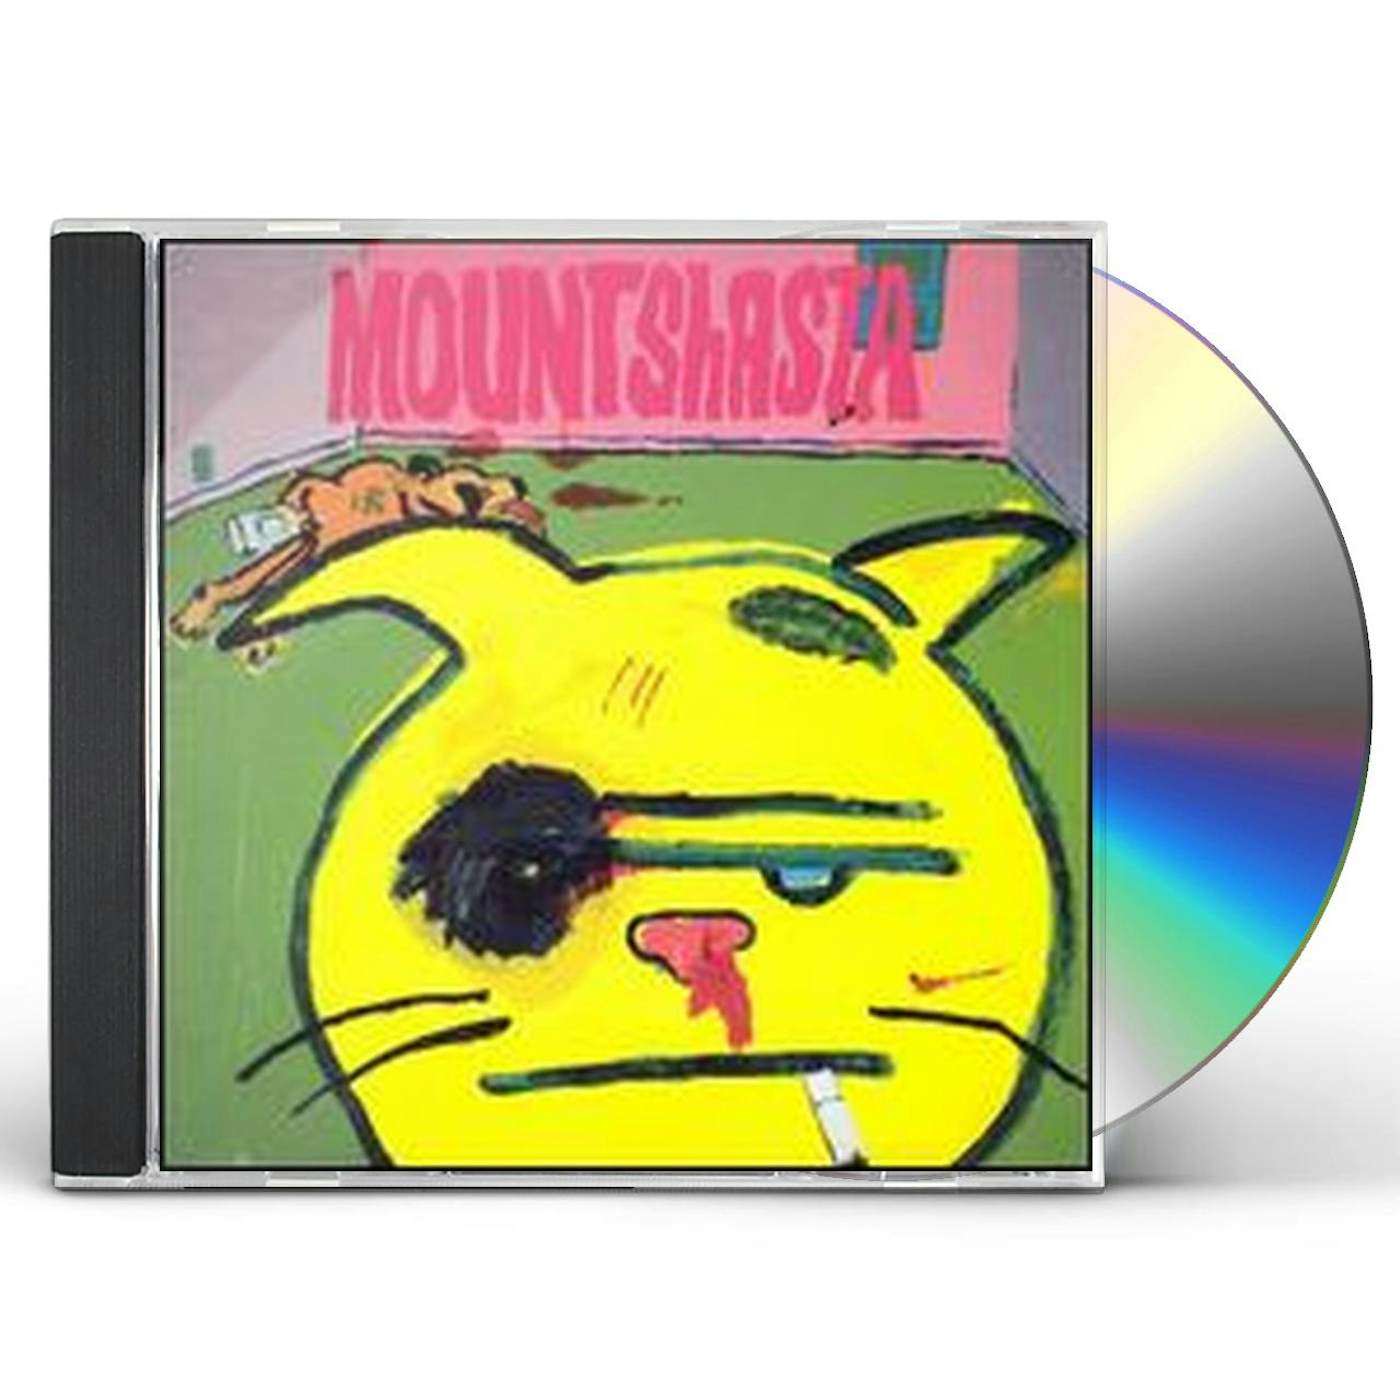 Mount Shasta PUT THE CREEP ON CD